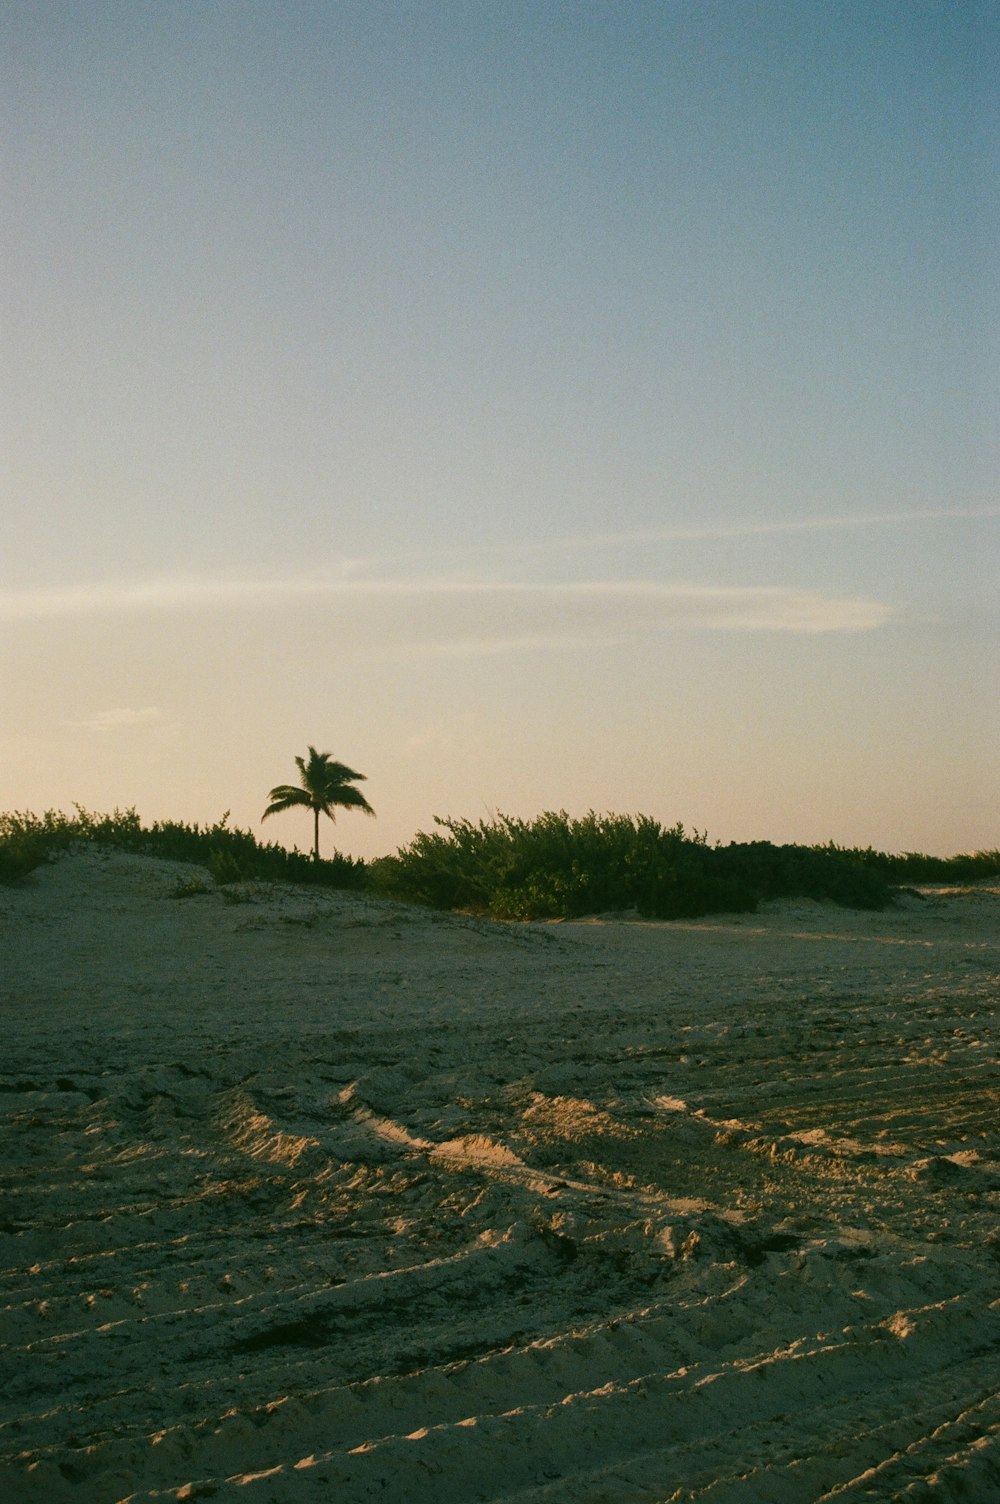 a lone palm tree on a sandy beach